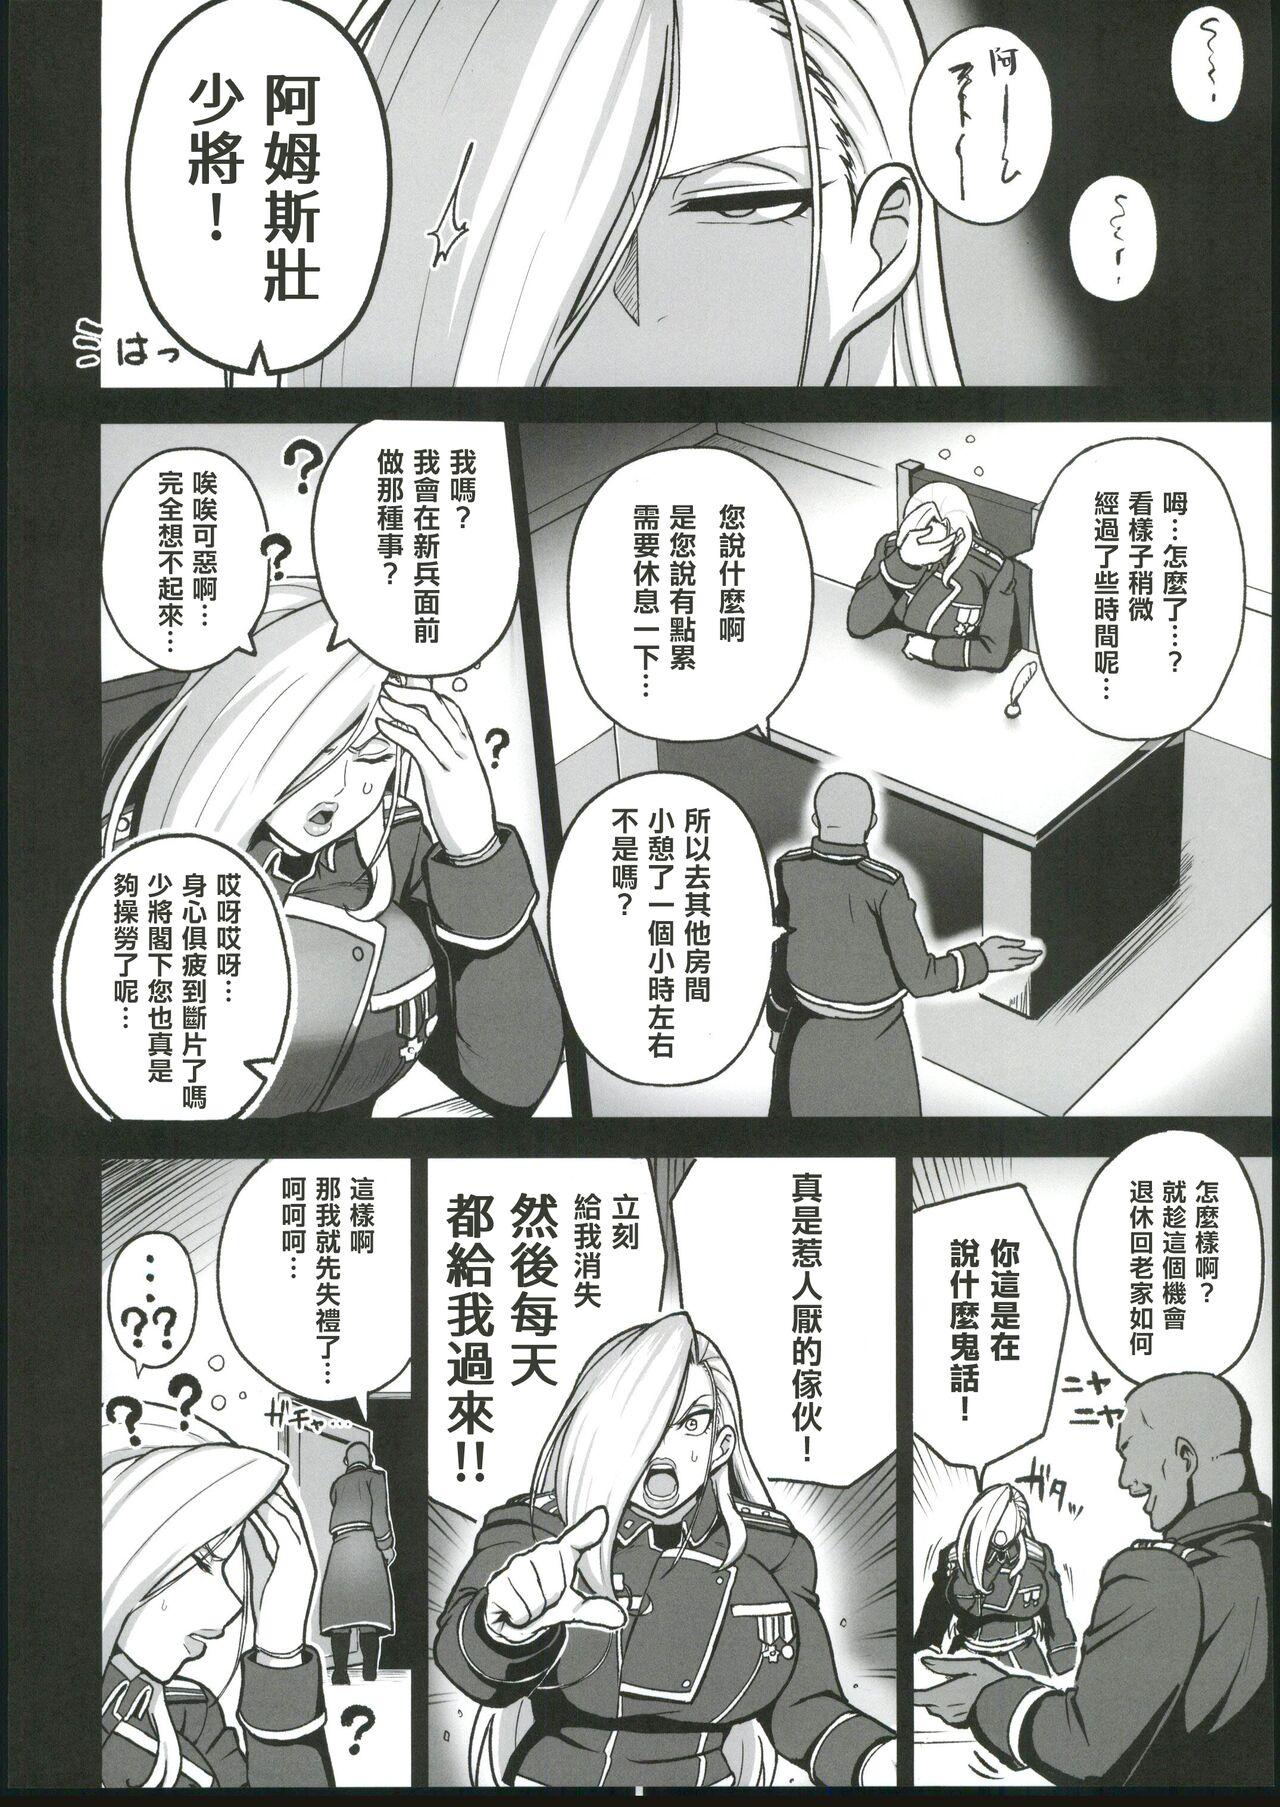 Tugging Jukujo Shougun VS Saimin no Renkinjutsushi - Armstrong VS Hypnotic Alchemist - Fullmetal alchemist | hagane no renkinjutsushi Naked Sluts - Page 7